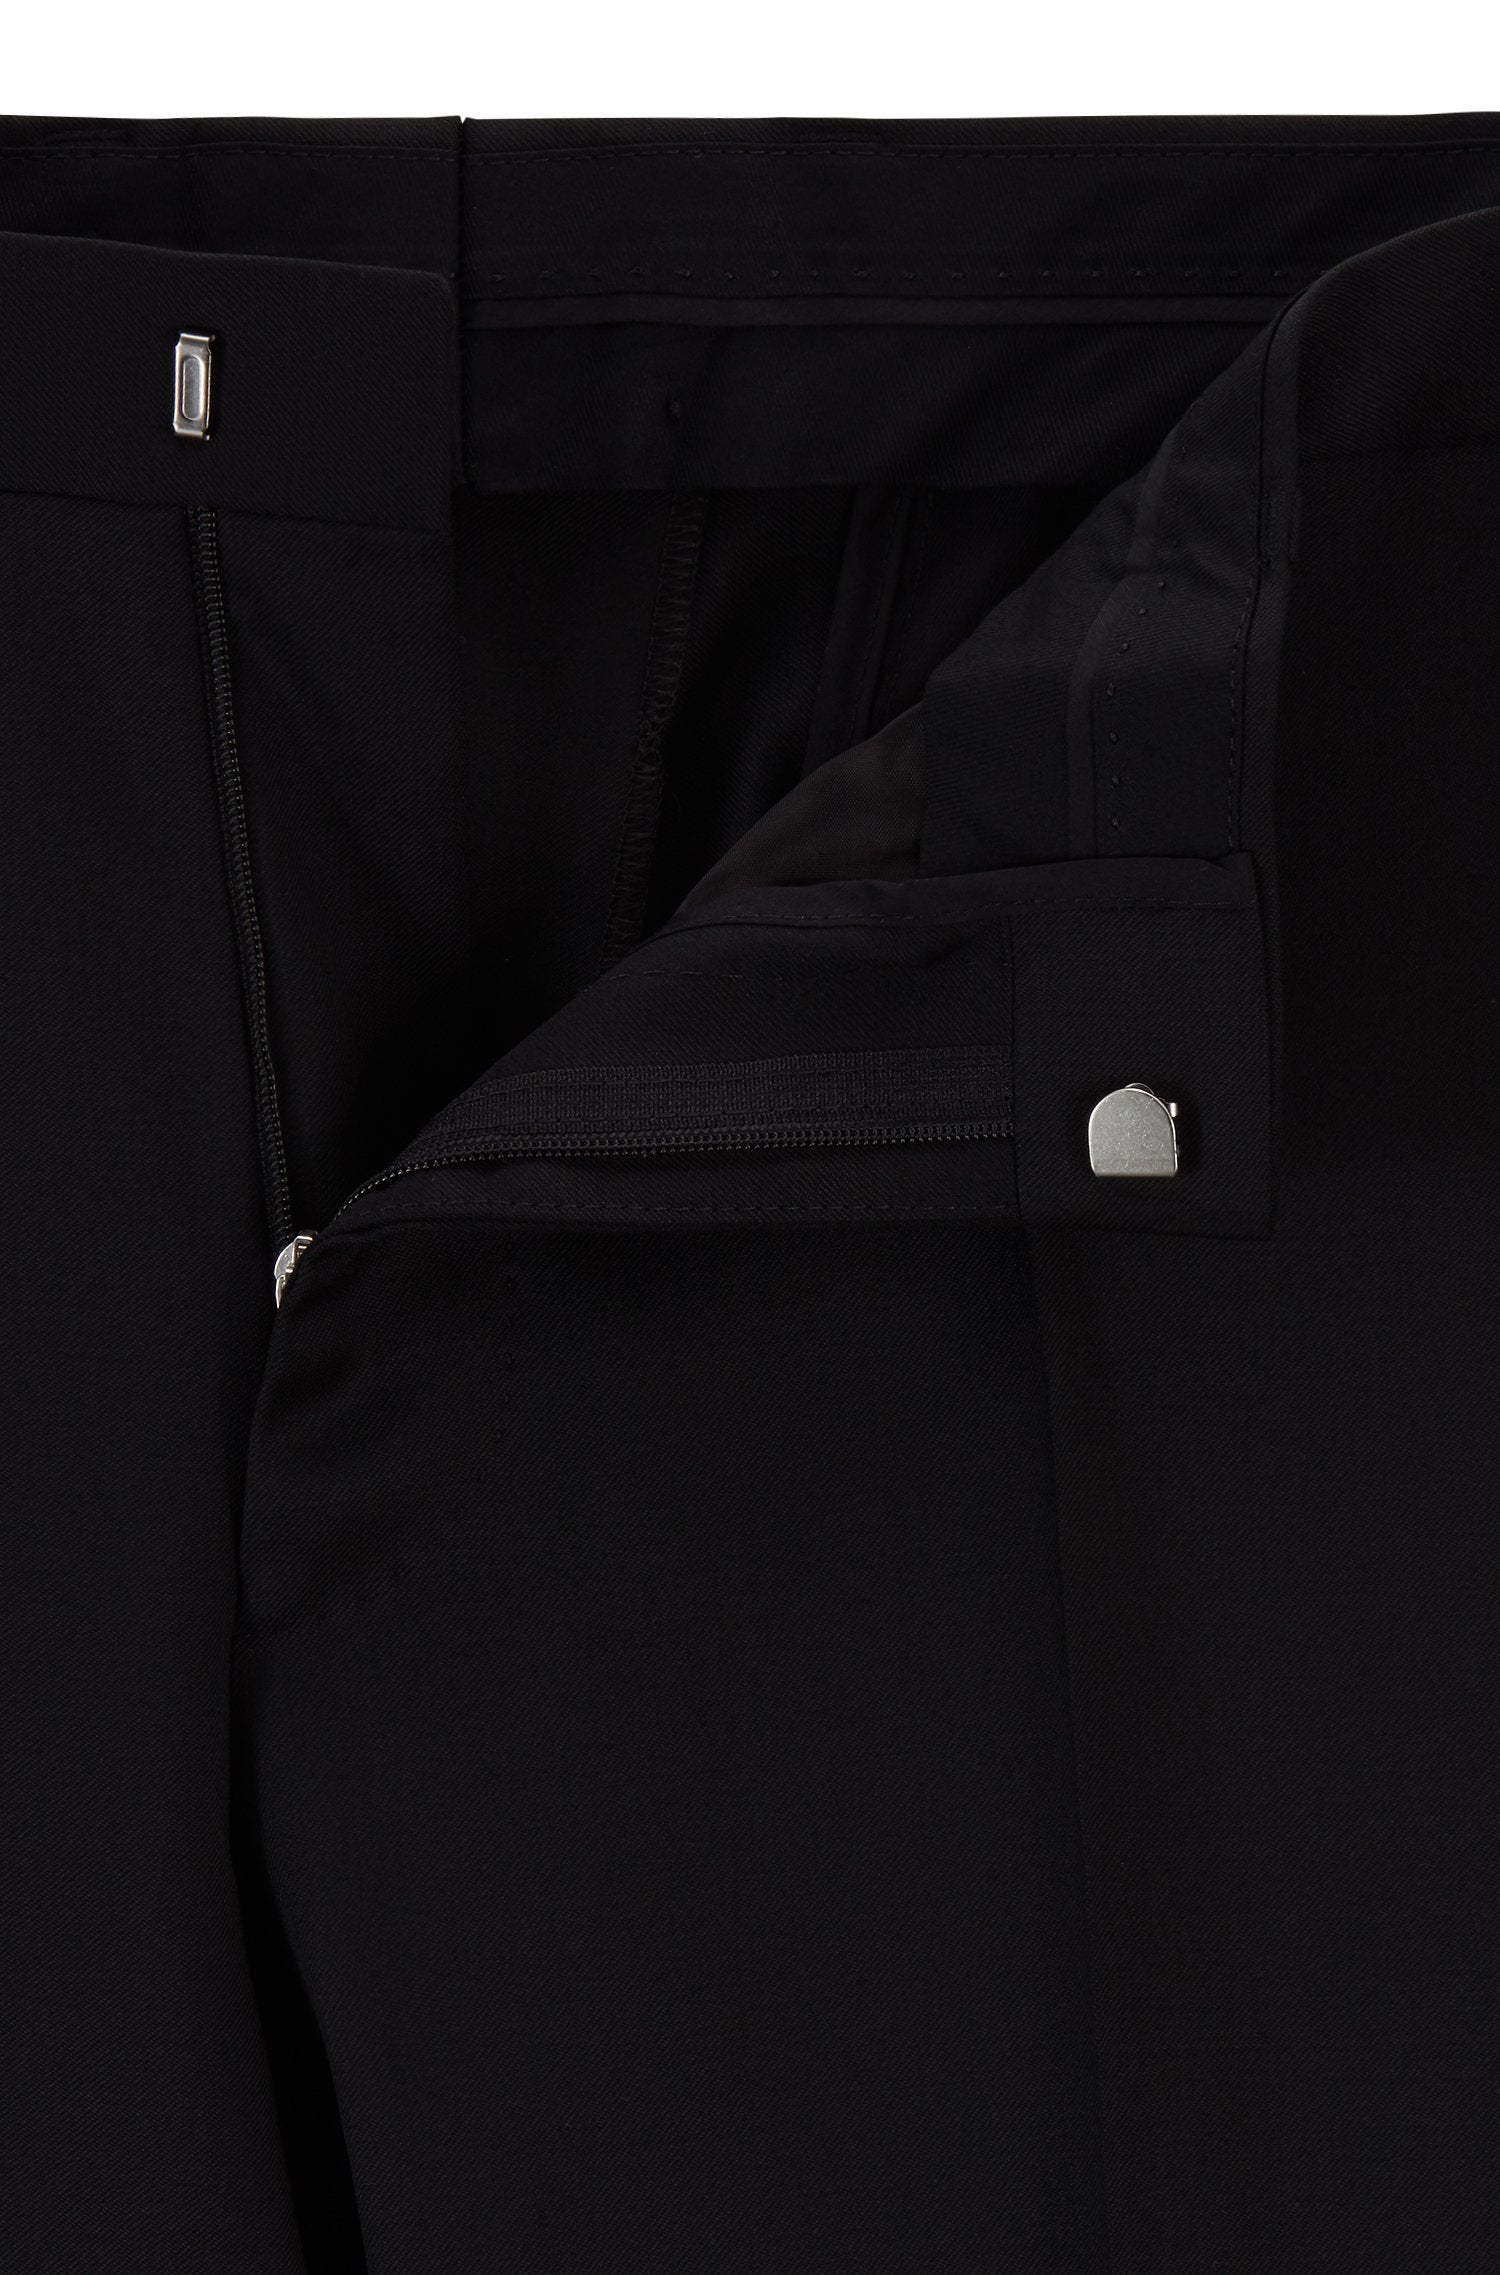 BOSS Genius5 Slim Fit Trousers 001 Black